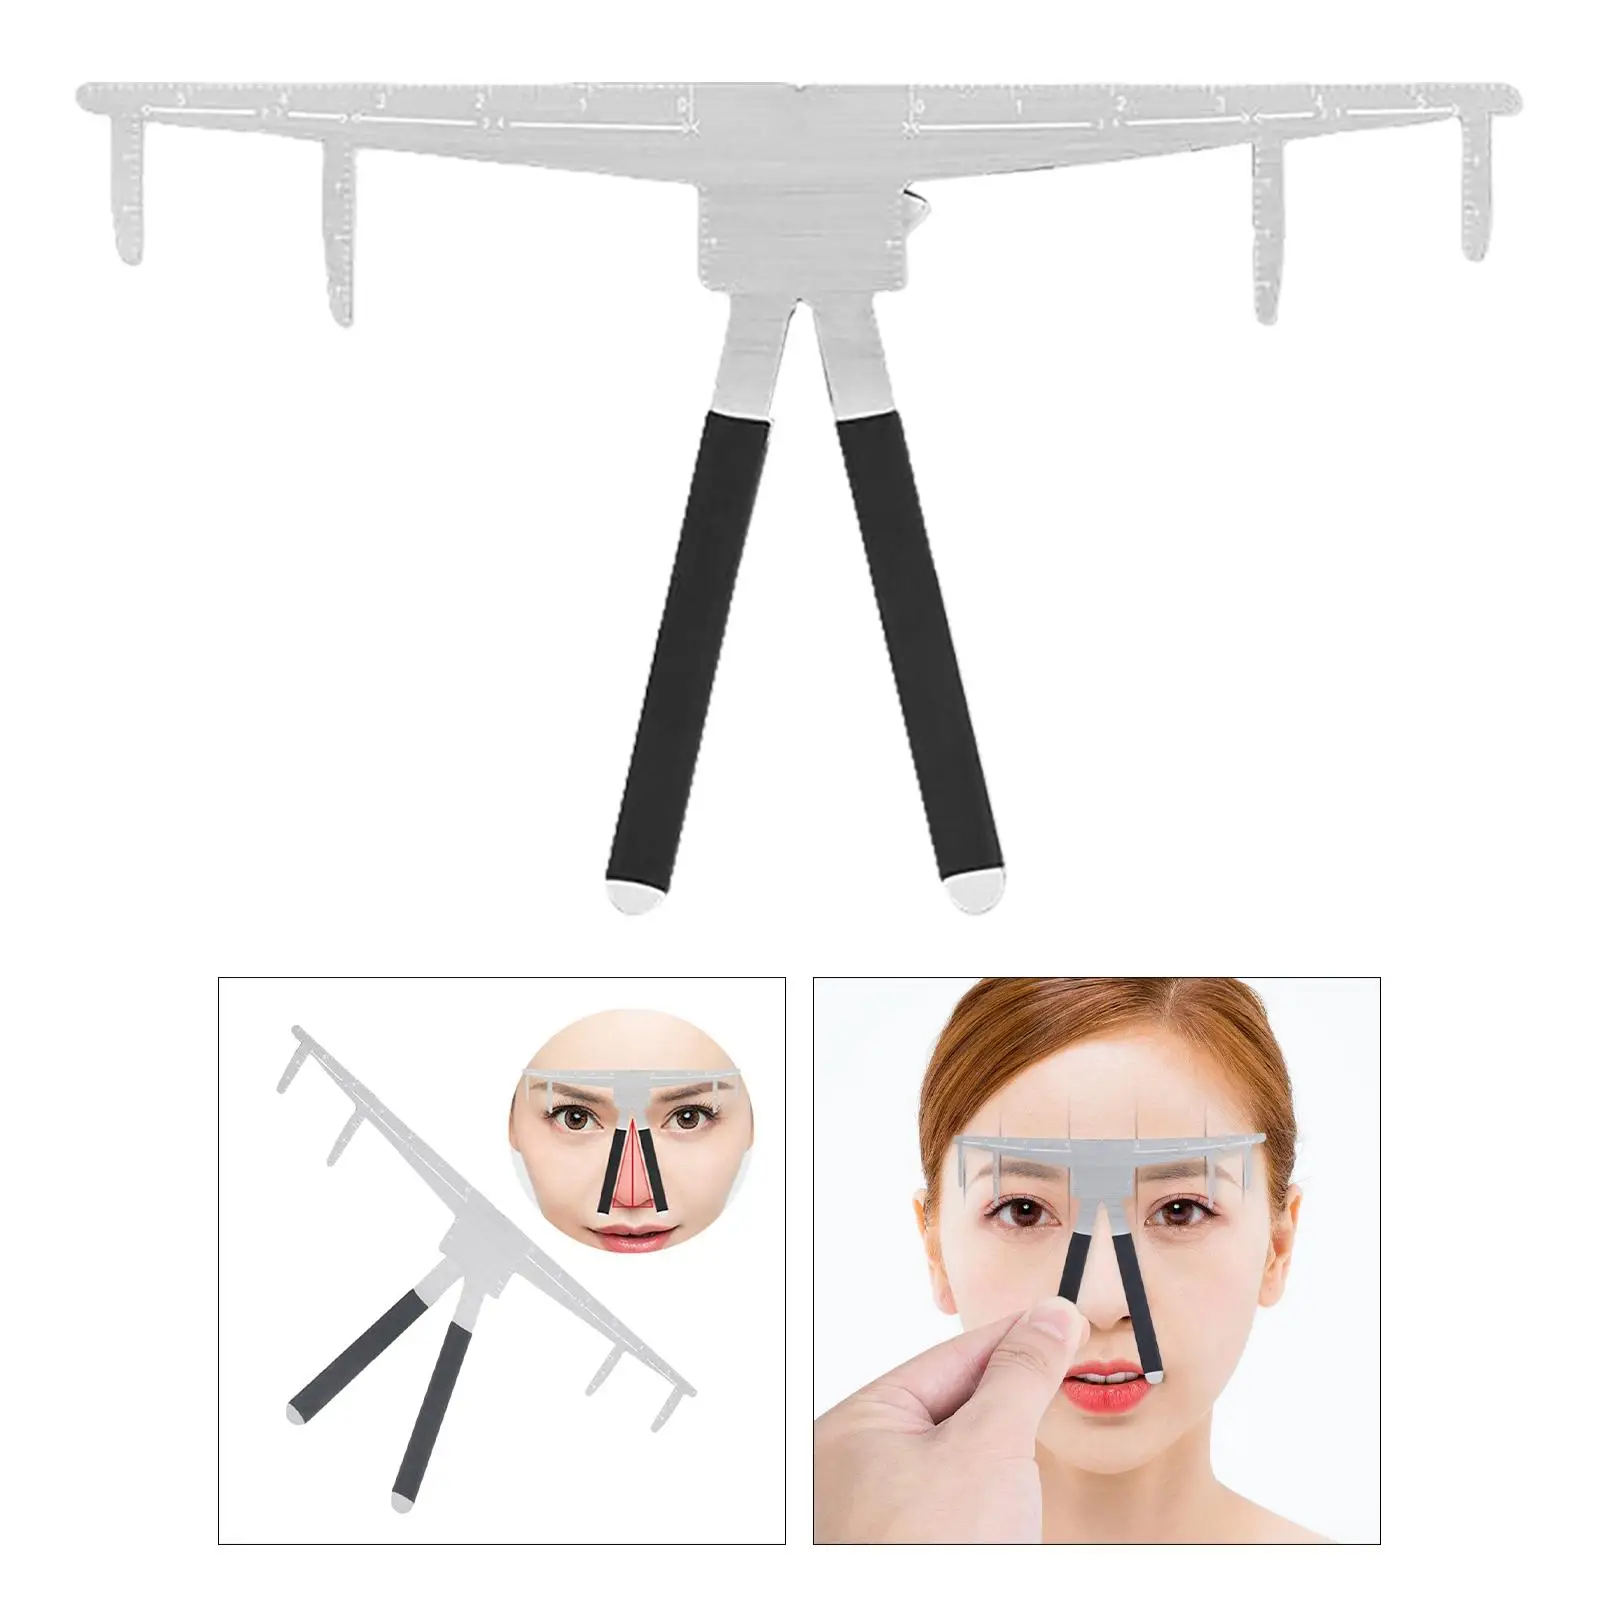  Eyebrow Ruler  Positioning Permanent Makeup  tool Grooming Stencil Shaper Balance Ruler